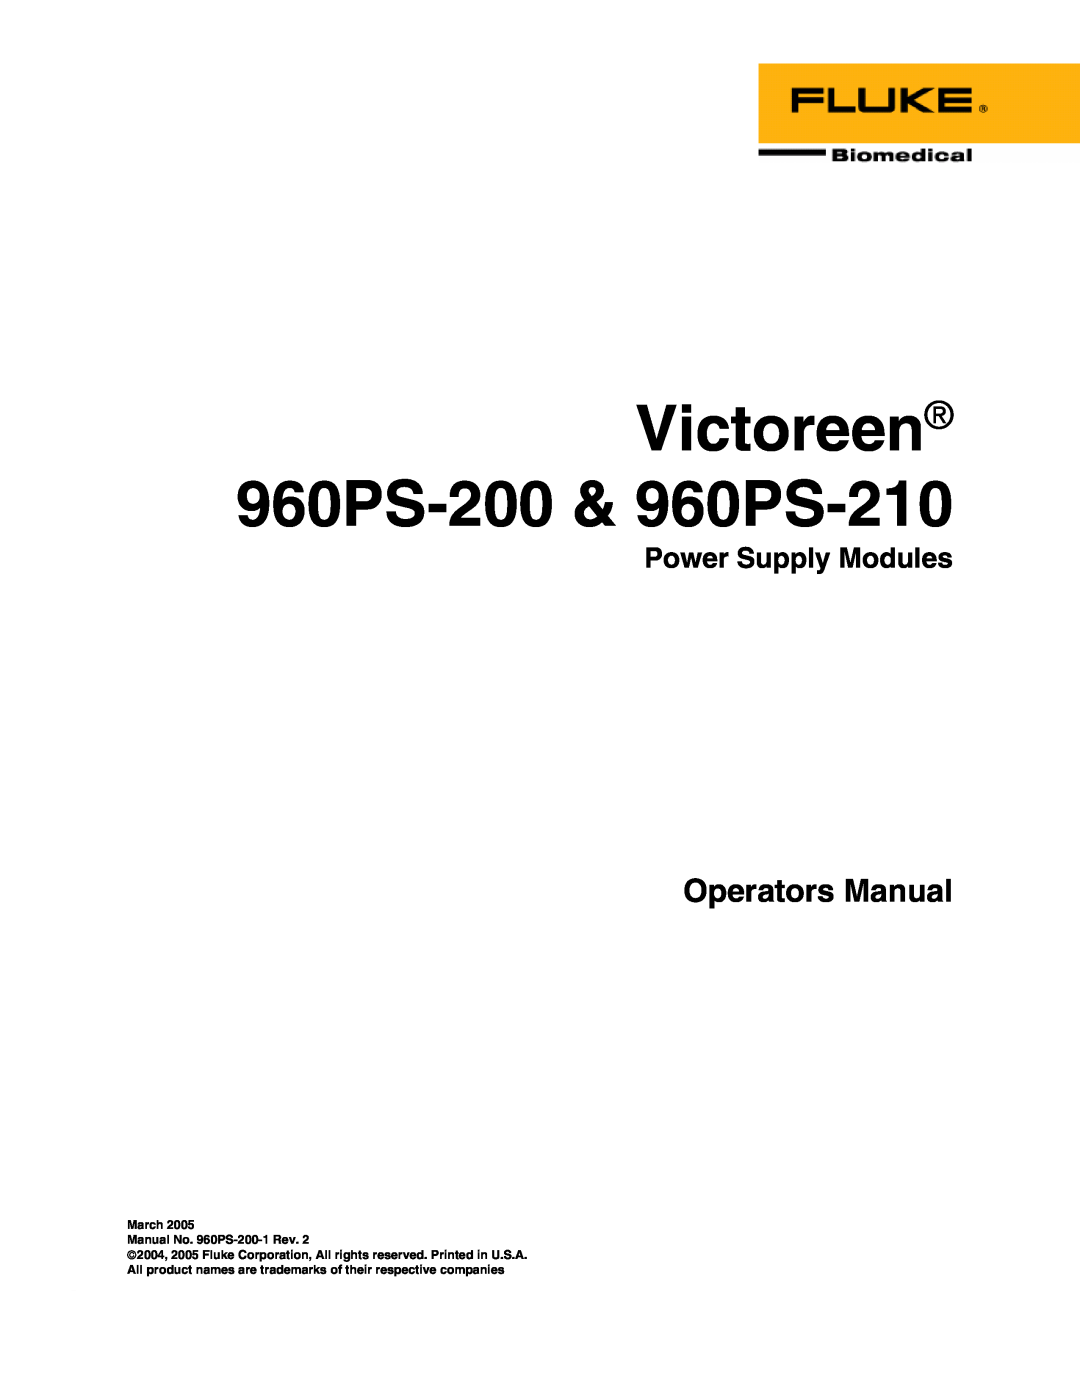 Fluke manual Power Supply Modules, Victoreen 960PS-200& 960PS-210, Operators Manual 